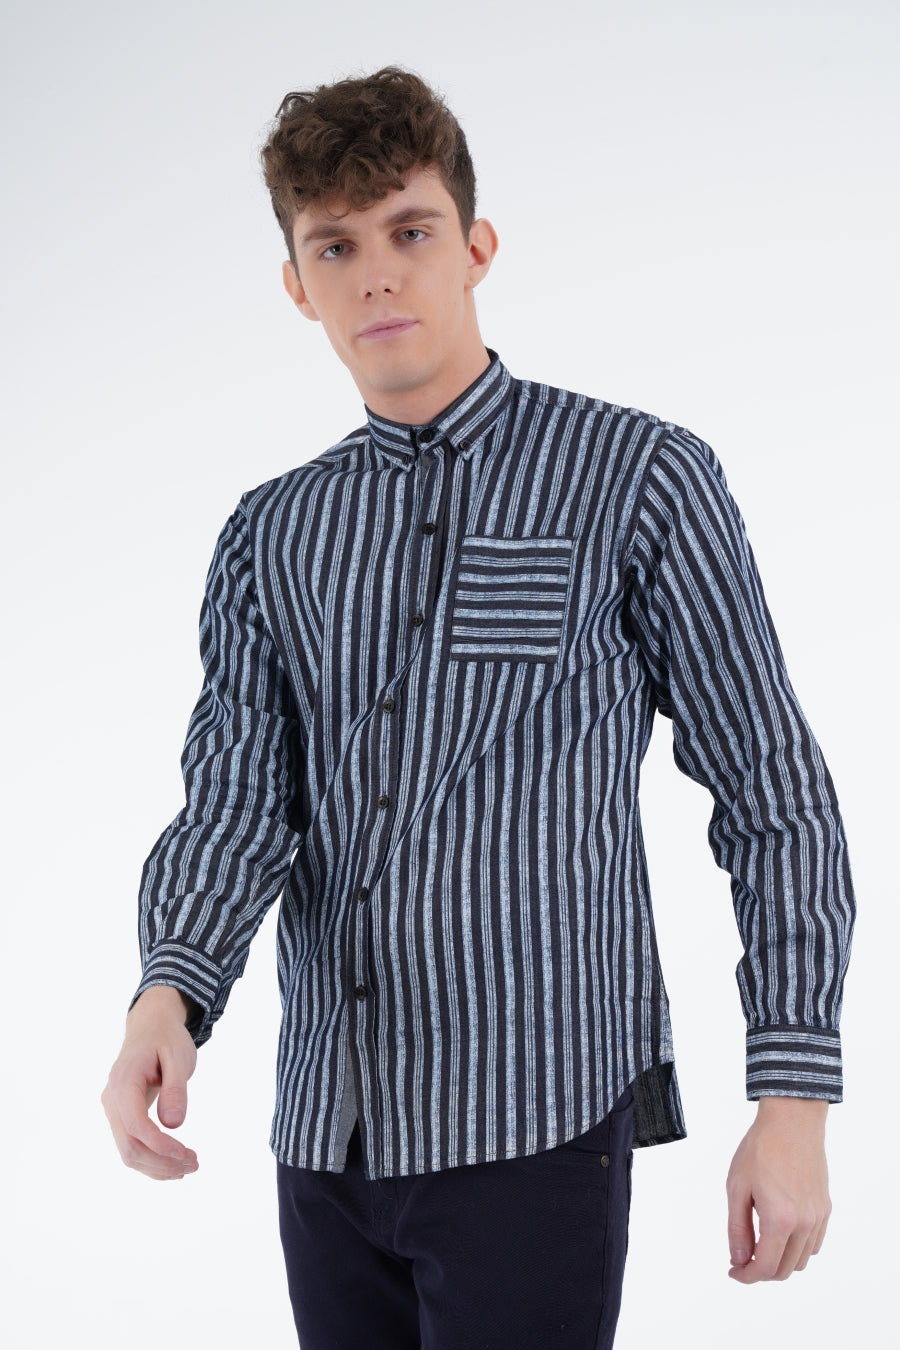 Black Striped Shirt